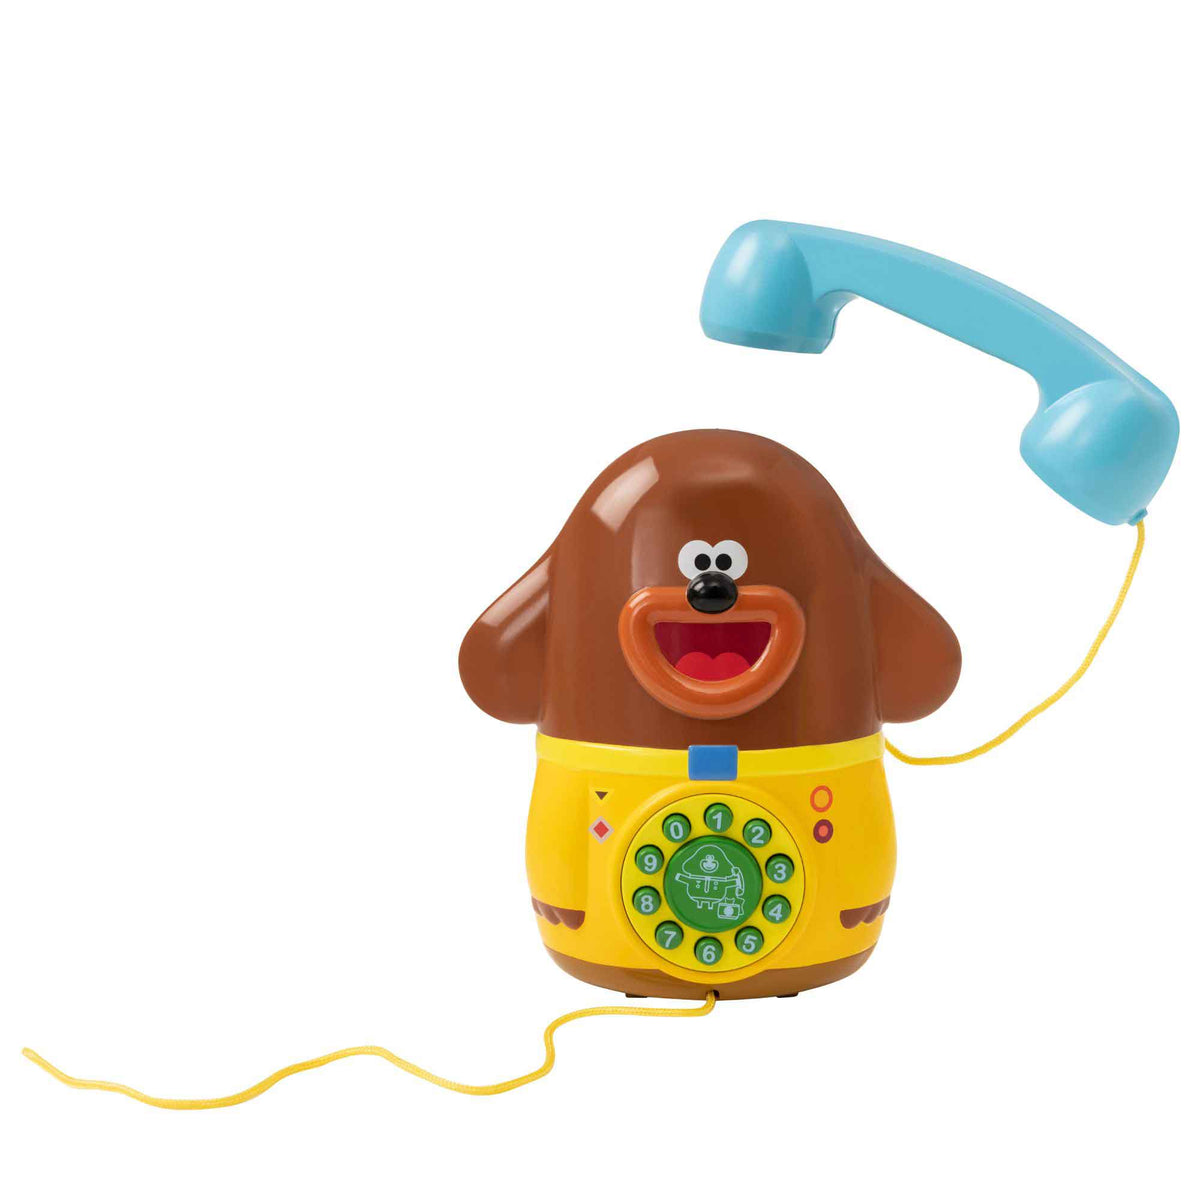 Hey Duggee Toy Phone